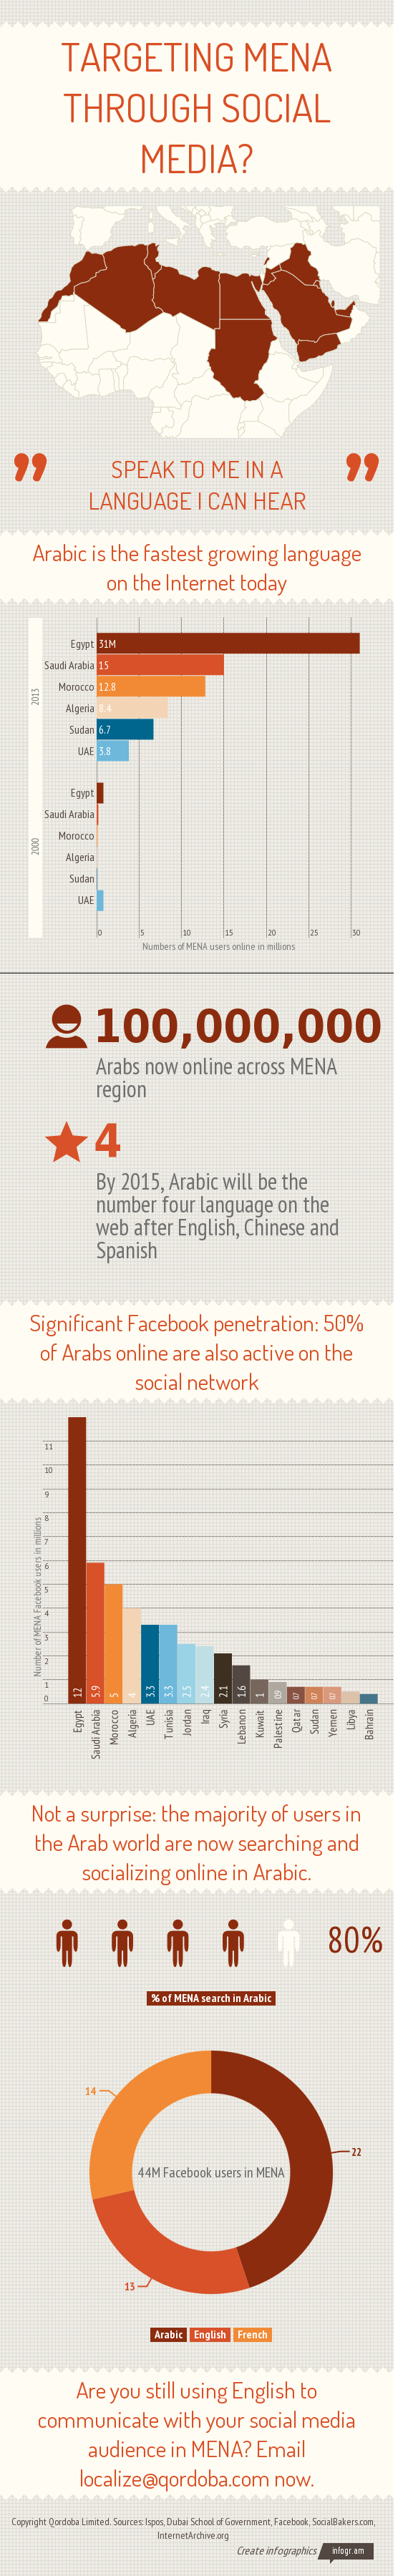 Targeting MENA through social media thumb Anfujravek: Trends in the Arabic language in social networks